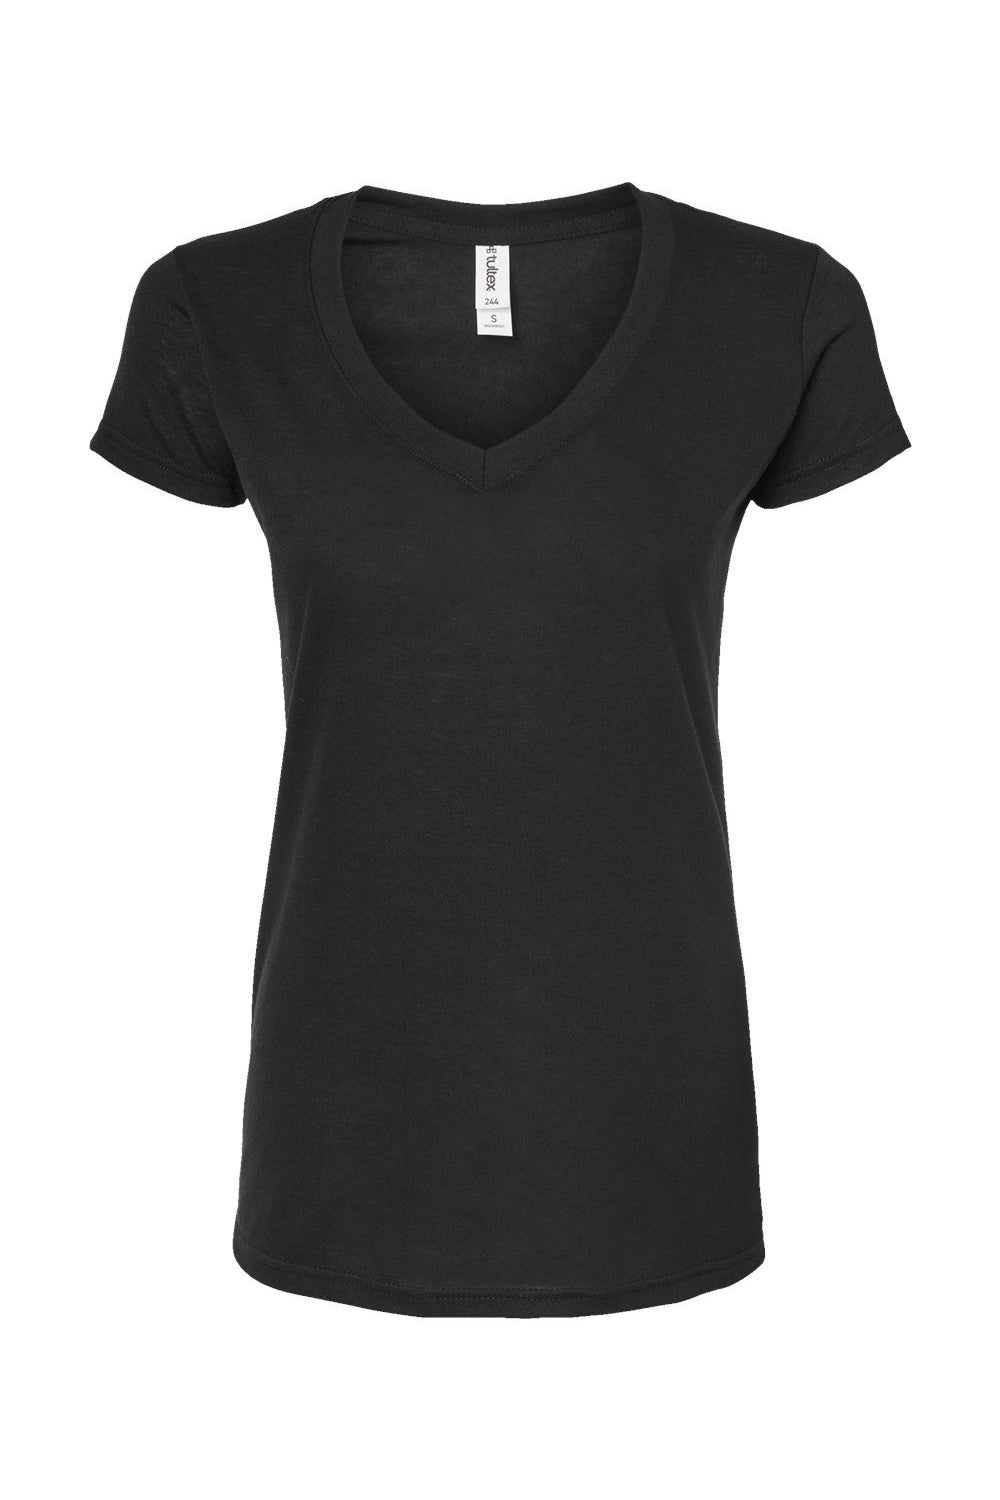 Tultex 244 Womens Poly-Rich Short Sleeve V-Neck T-Shirt Black Flat Front